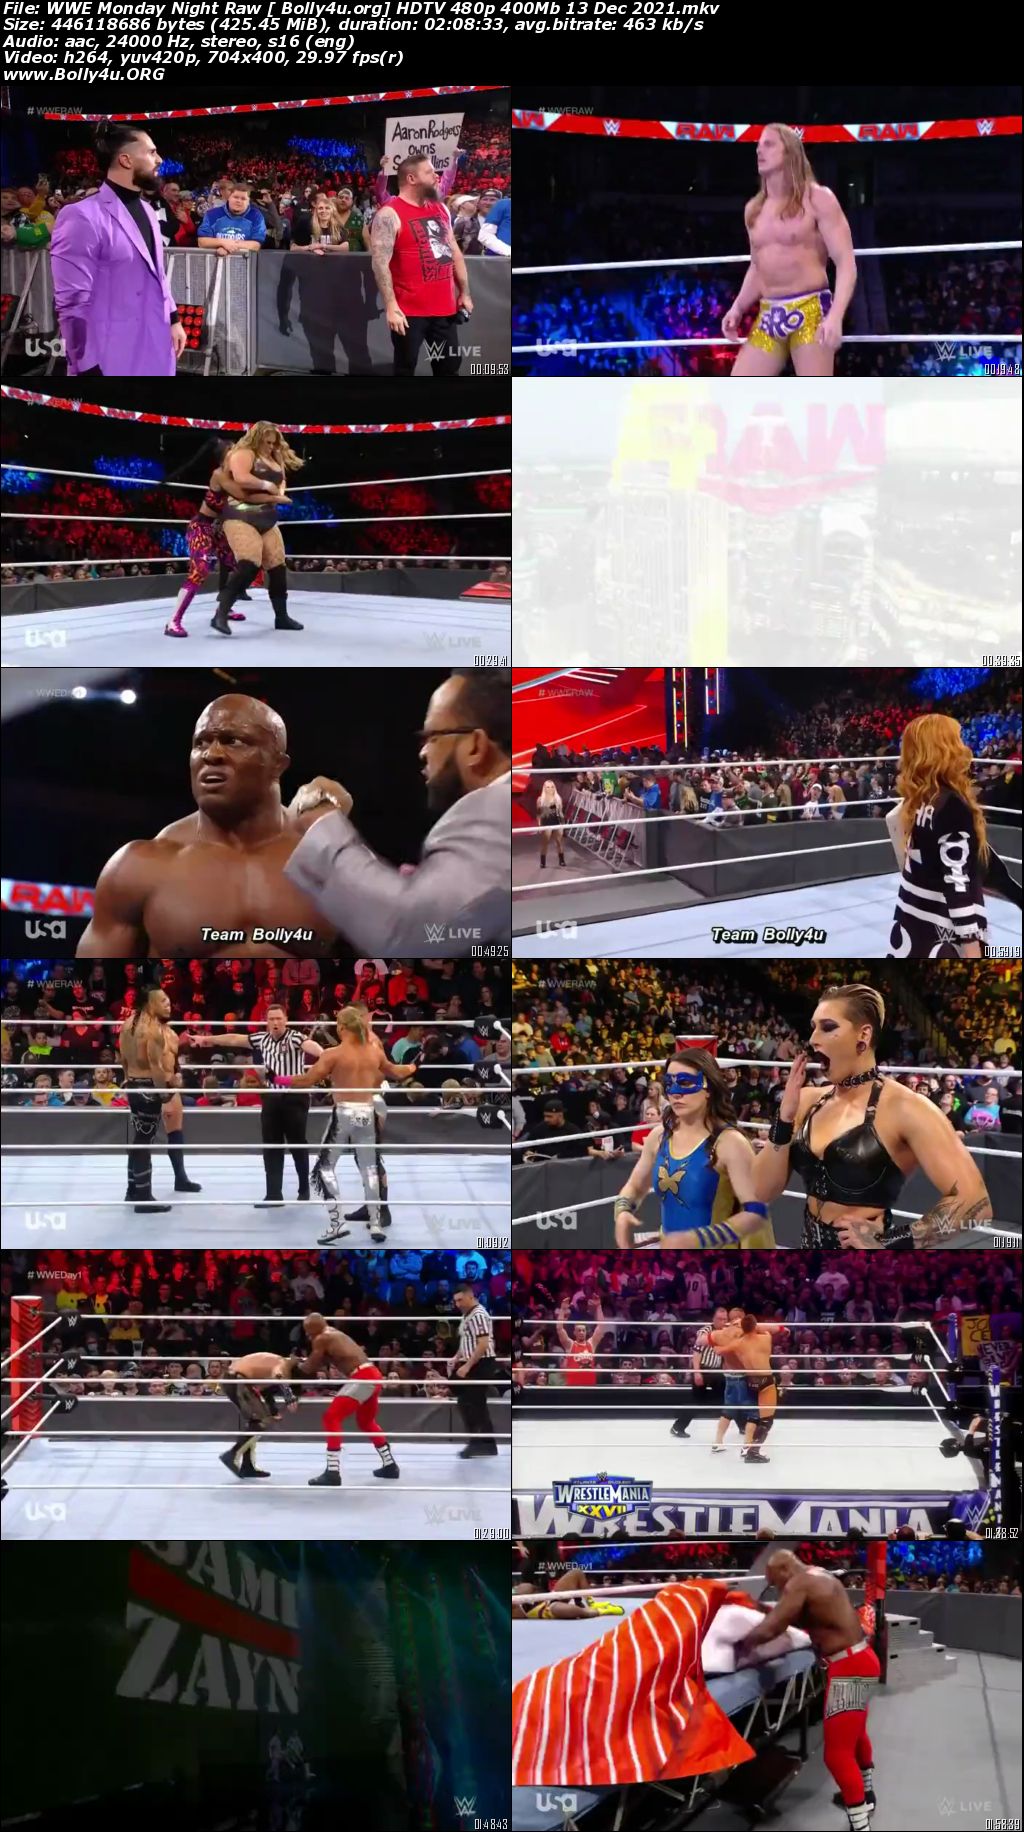 WWE Monday Night Raw HDTV 480p 400Mb 13 Dec 2021 Download